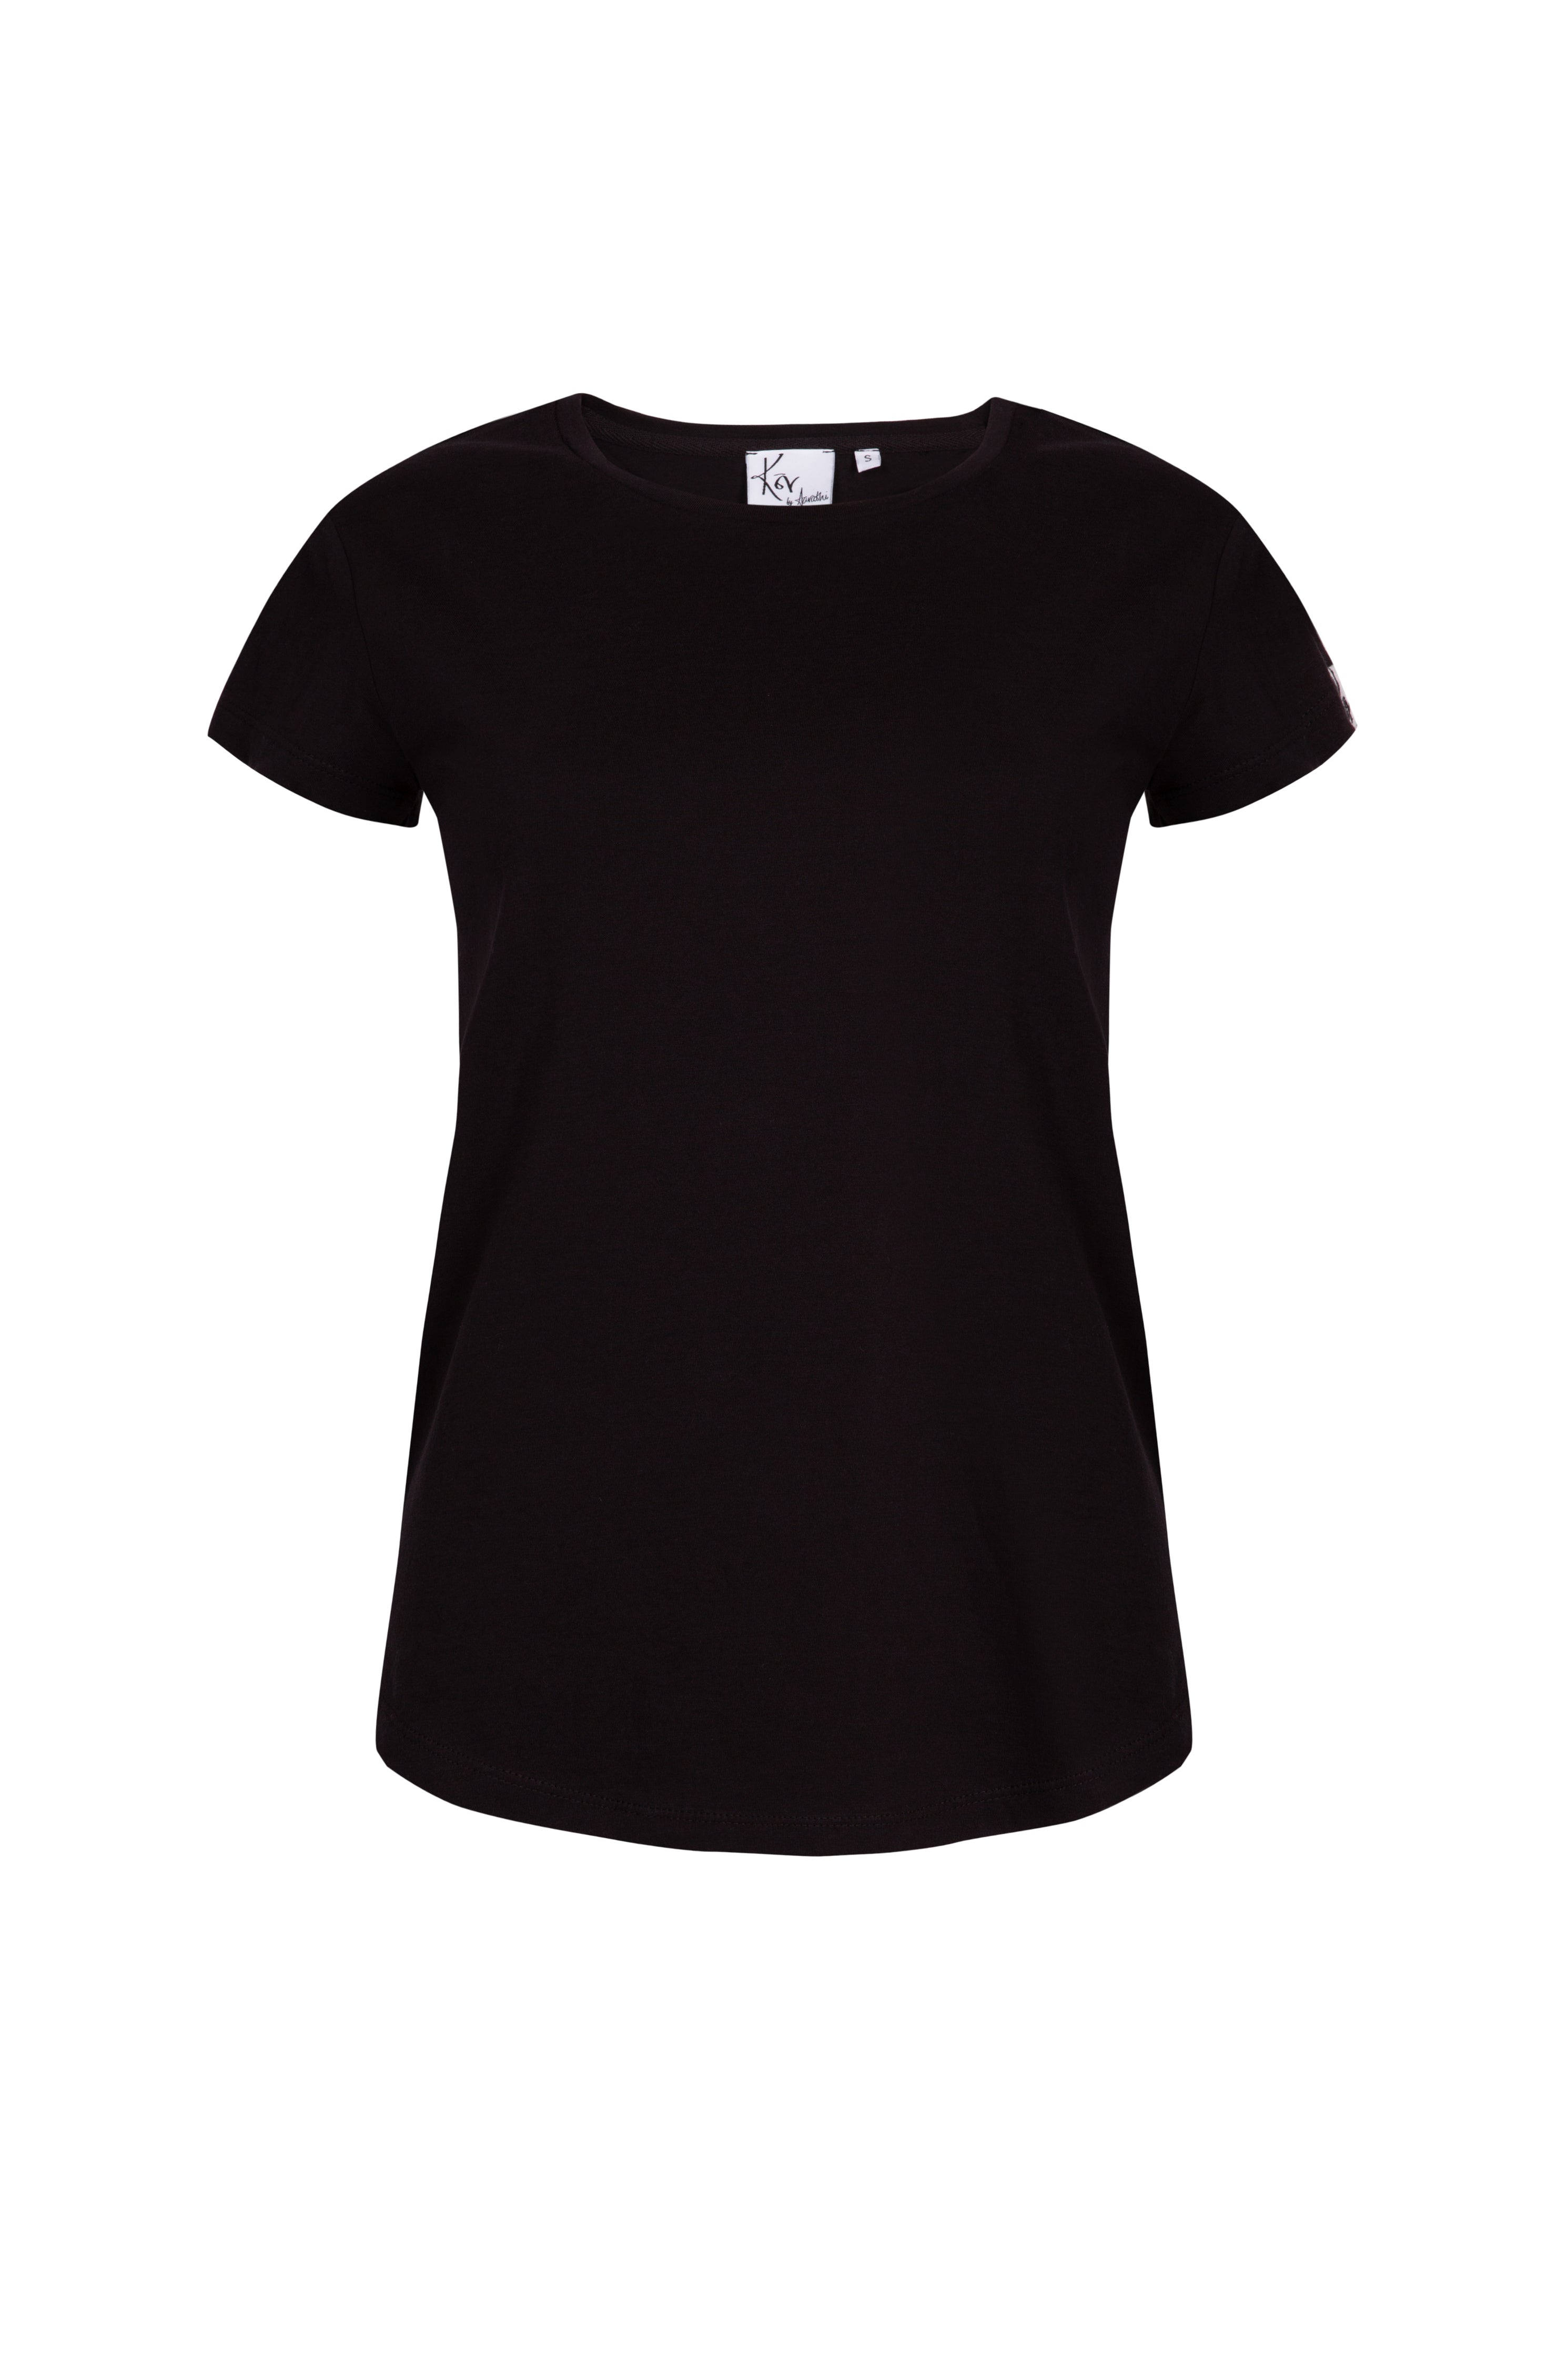 Black fitted organic cotton women's t-shirt